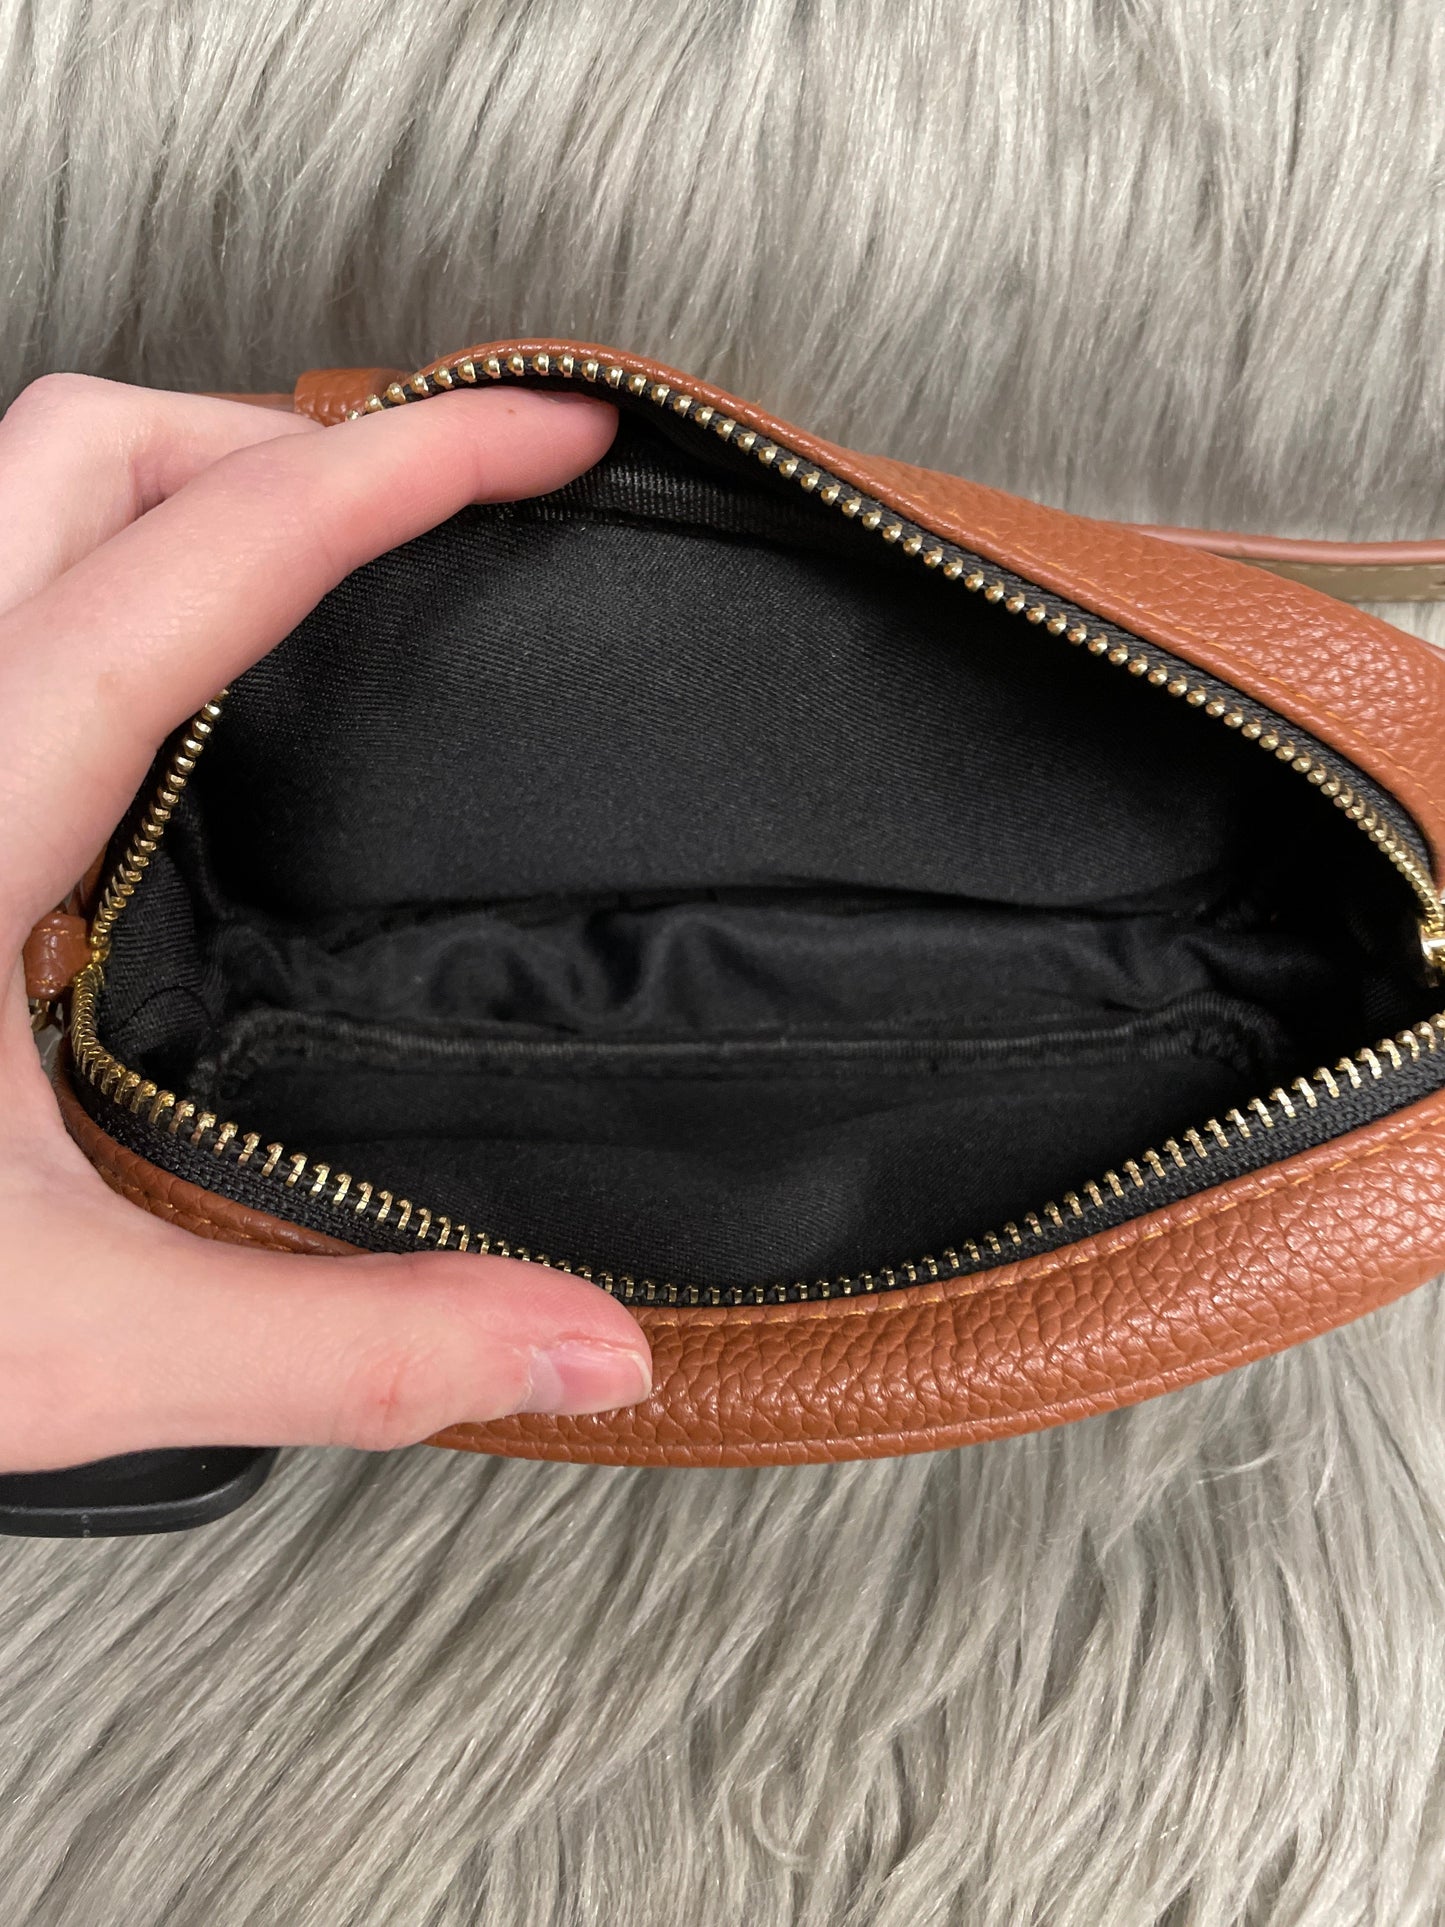 Belt Bag By Steve Madden  Size: Small